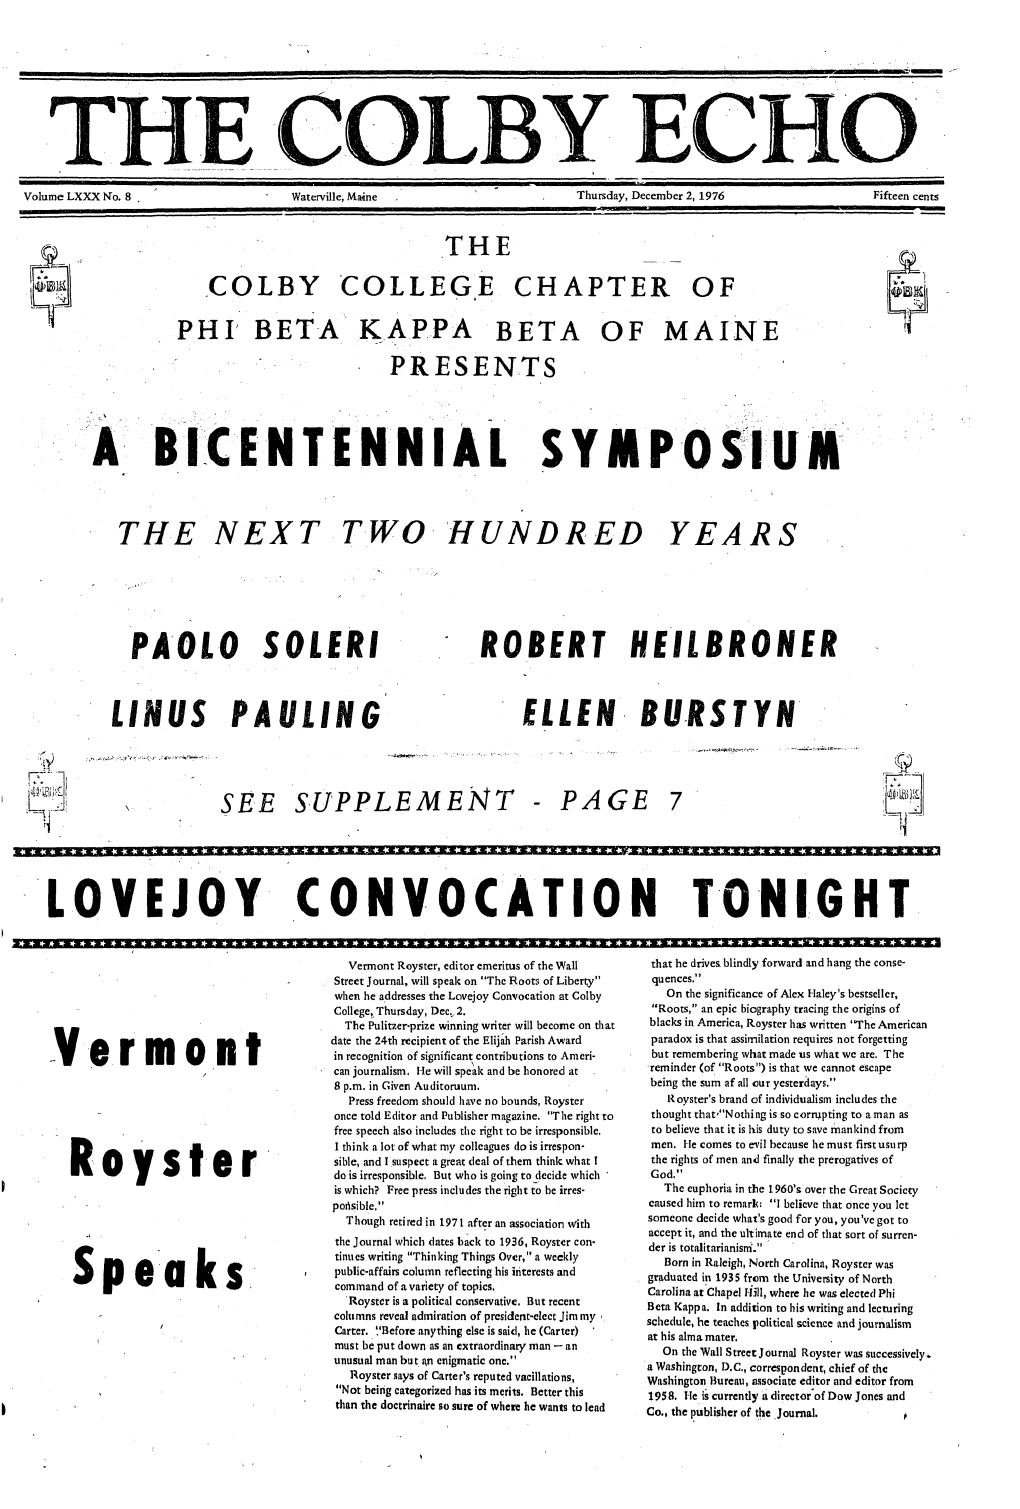 A Bicentennial Symposium